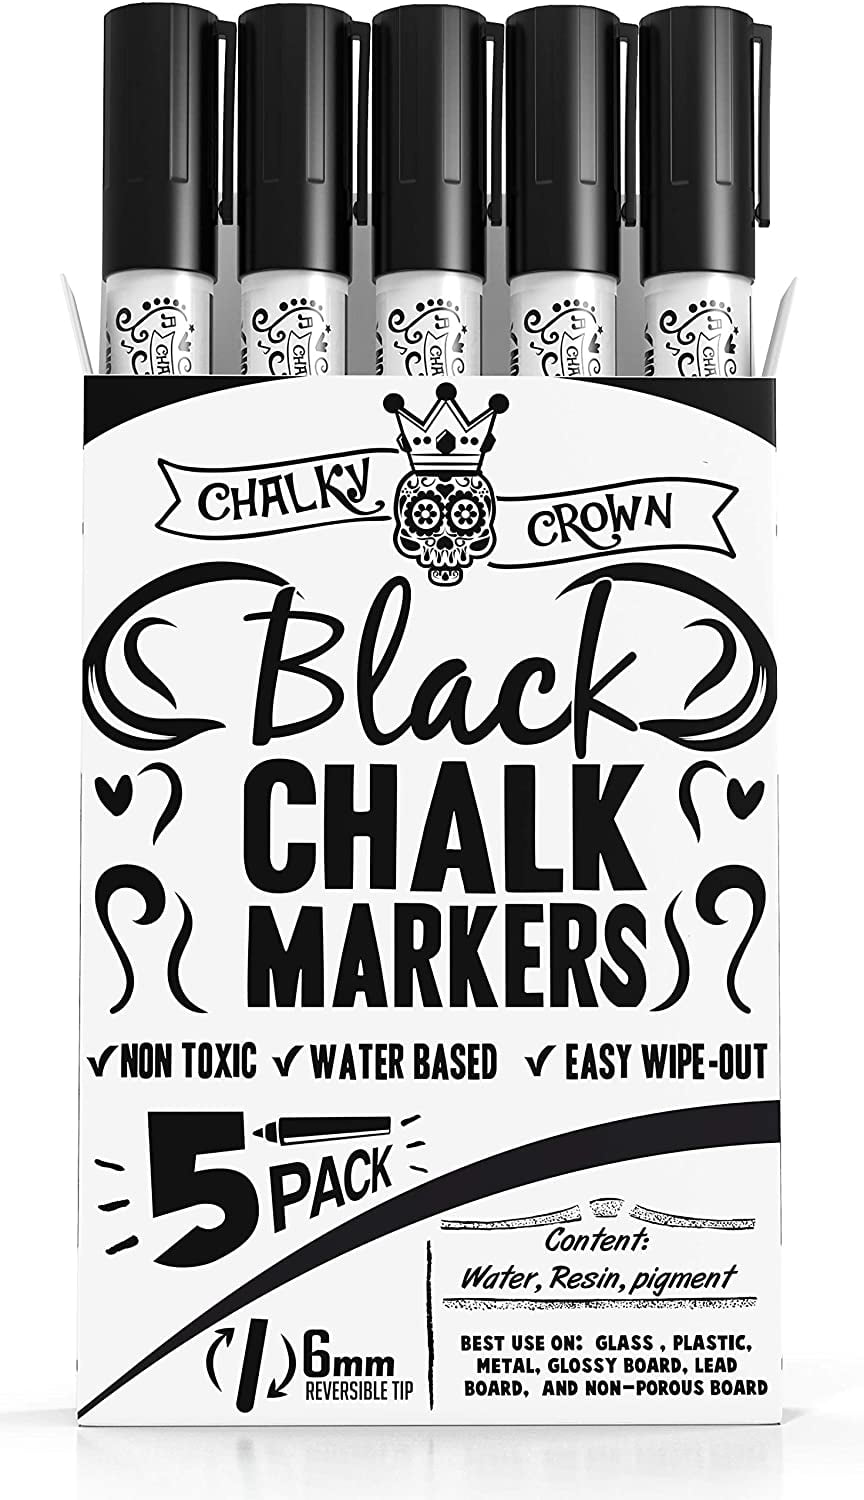 Liquid Chalk Marker Pen - Dry Erase Marker - Chalk Markers for Chalkboard  Signs, Windows, Blackboard, Glass - 6mm Reversible Tip - 24 Chalkboard  Labels Included (Black, 5 Pack) 